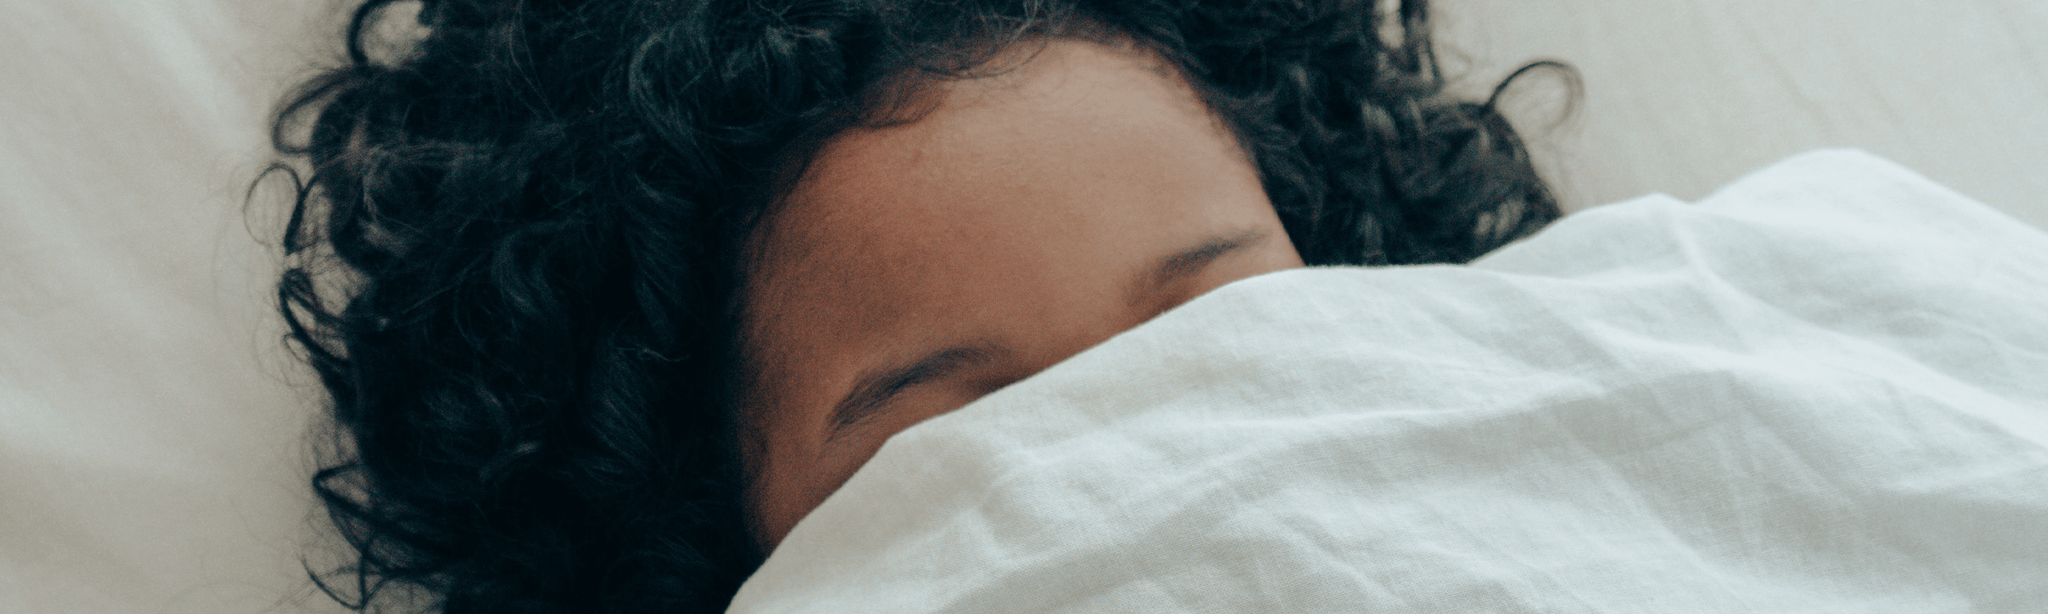 3 Ways to Get a Better Night's Sleep